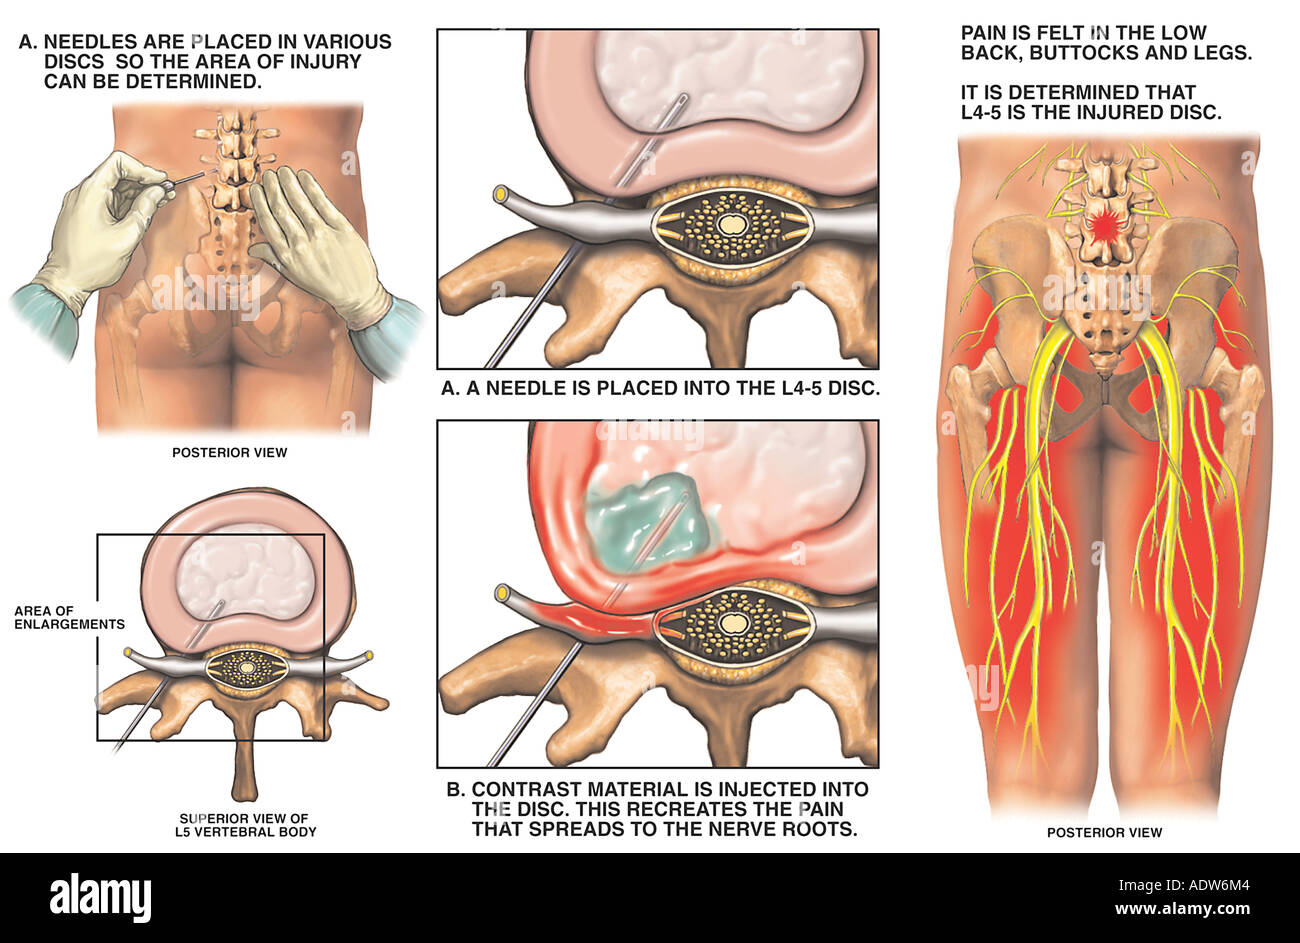 l4 disc herniated lumbar discogram posterior alamy cervical decompression herniations